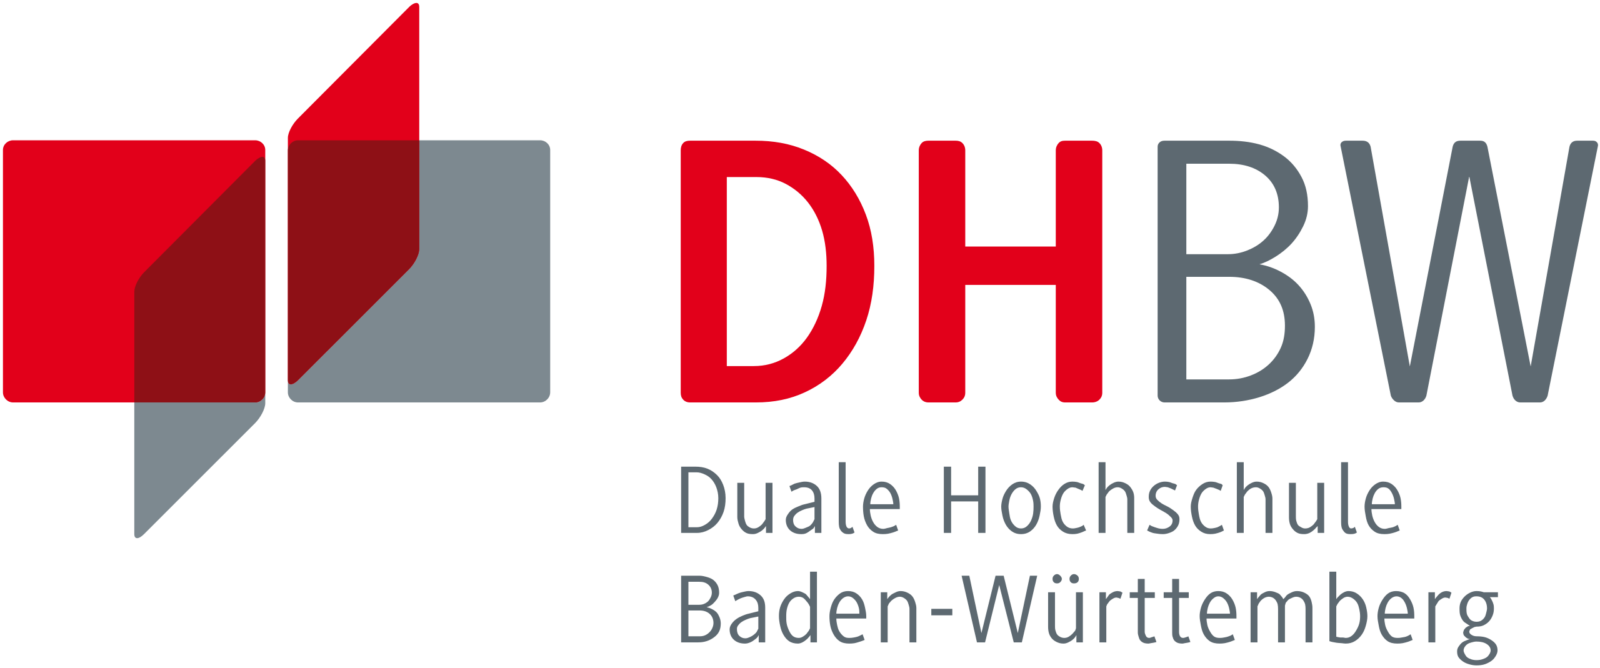 Köhler Bau DHBW Partner Bauingenieurwesen duale studieren